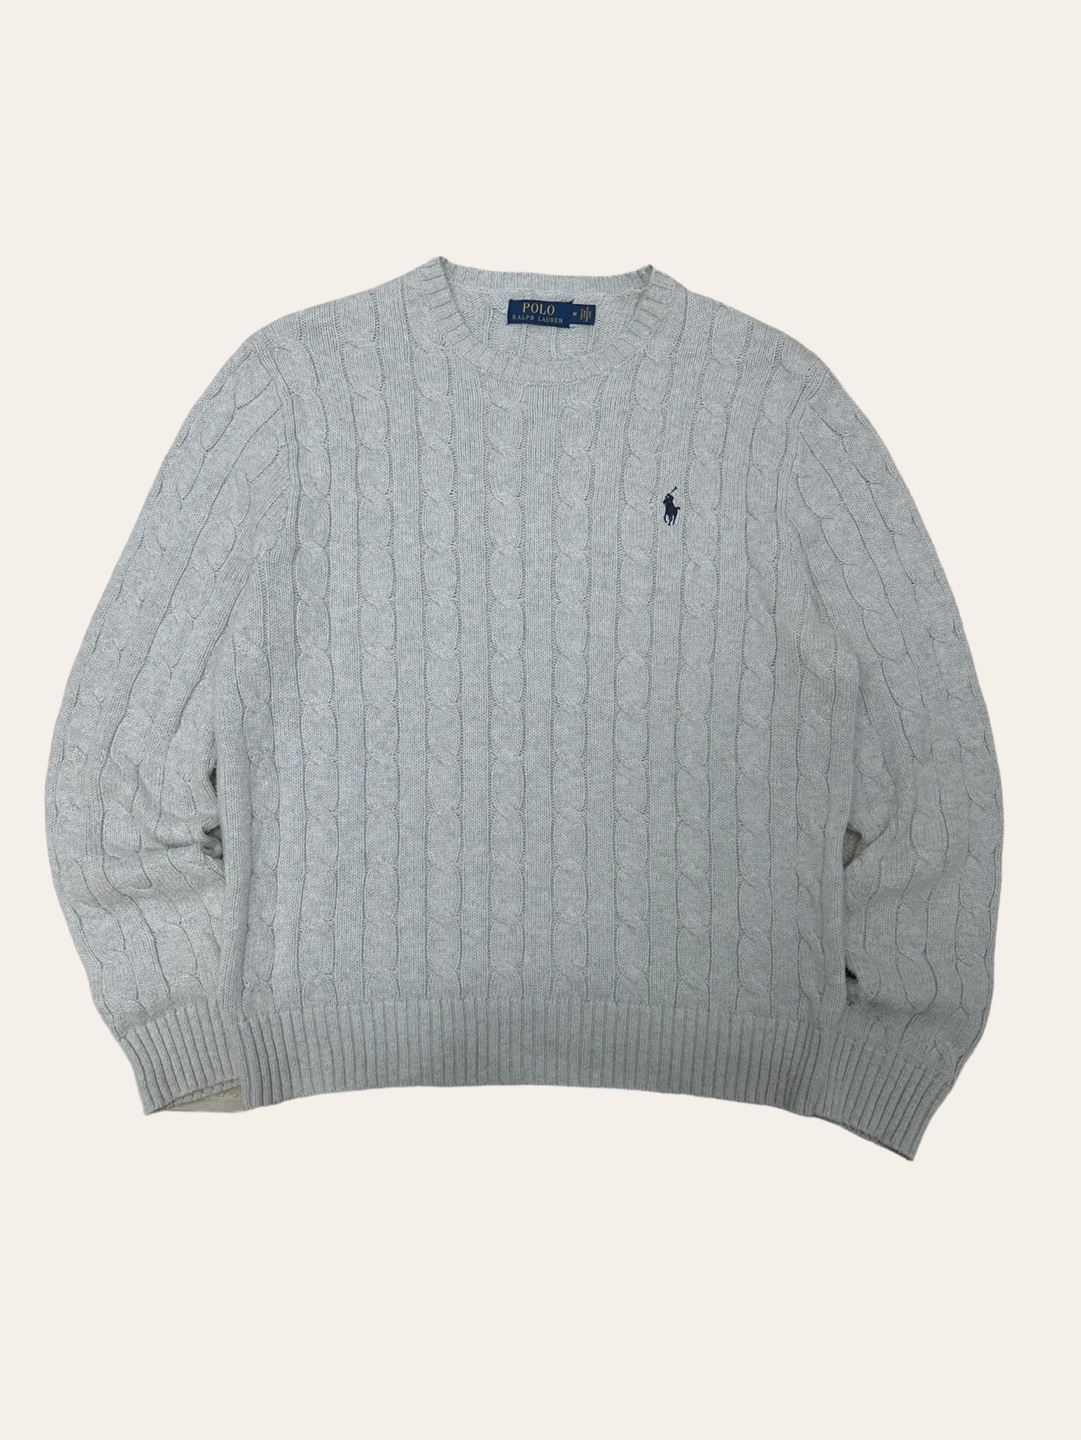 Polo ralph lauren light gray cotton cable sweater M